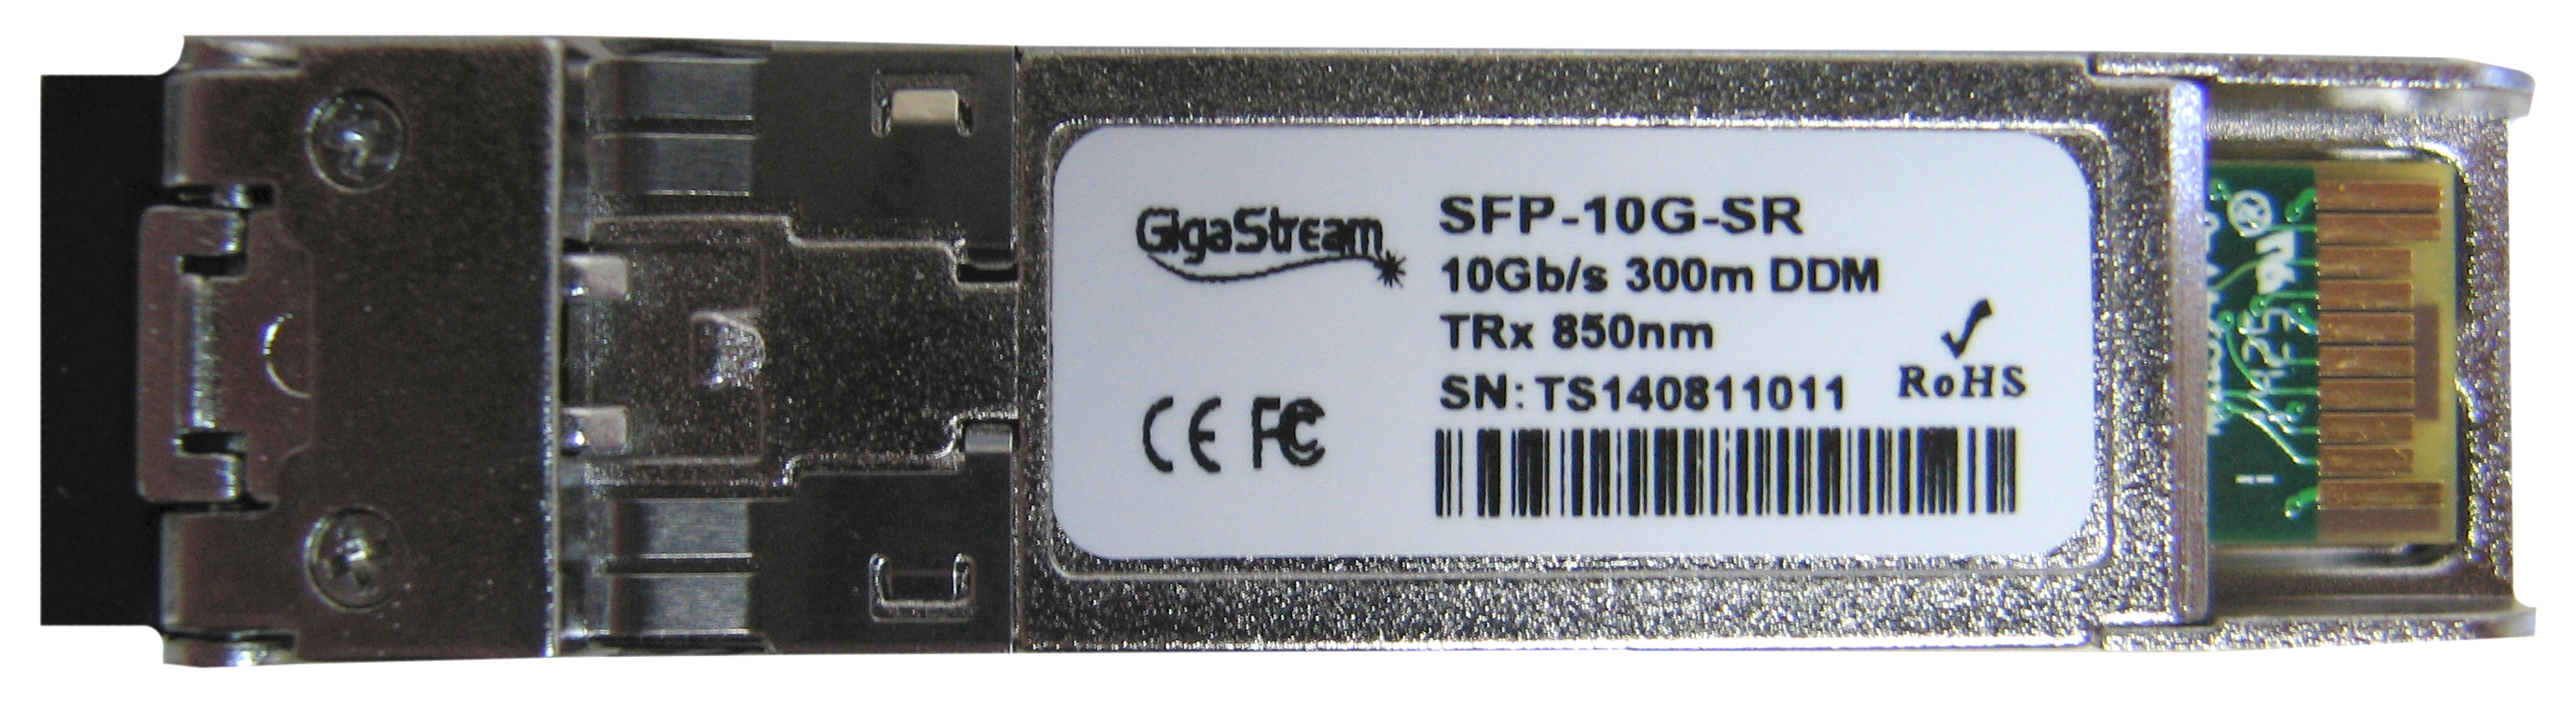 10G SFP+ GigaStream SFP-10G-SR - 850nm 300m Multi-Mode Transceiver with Digital Diagnostic and Monitoring